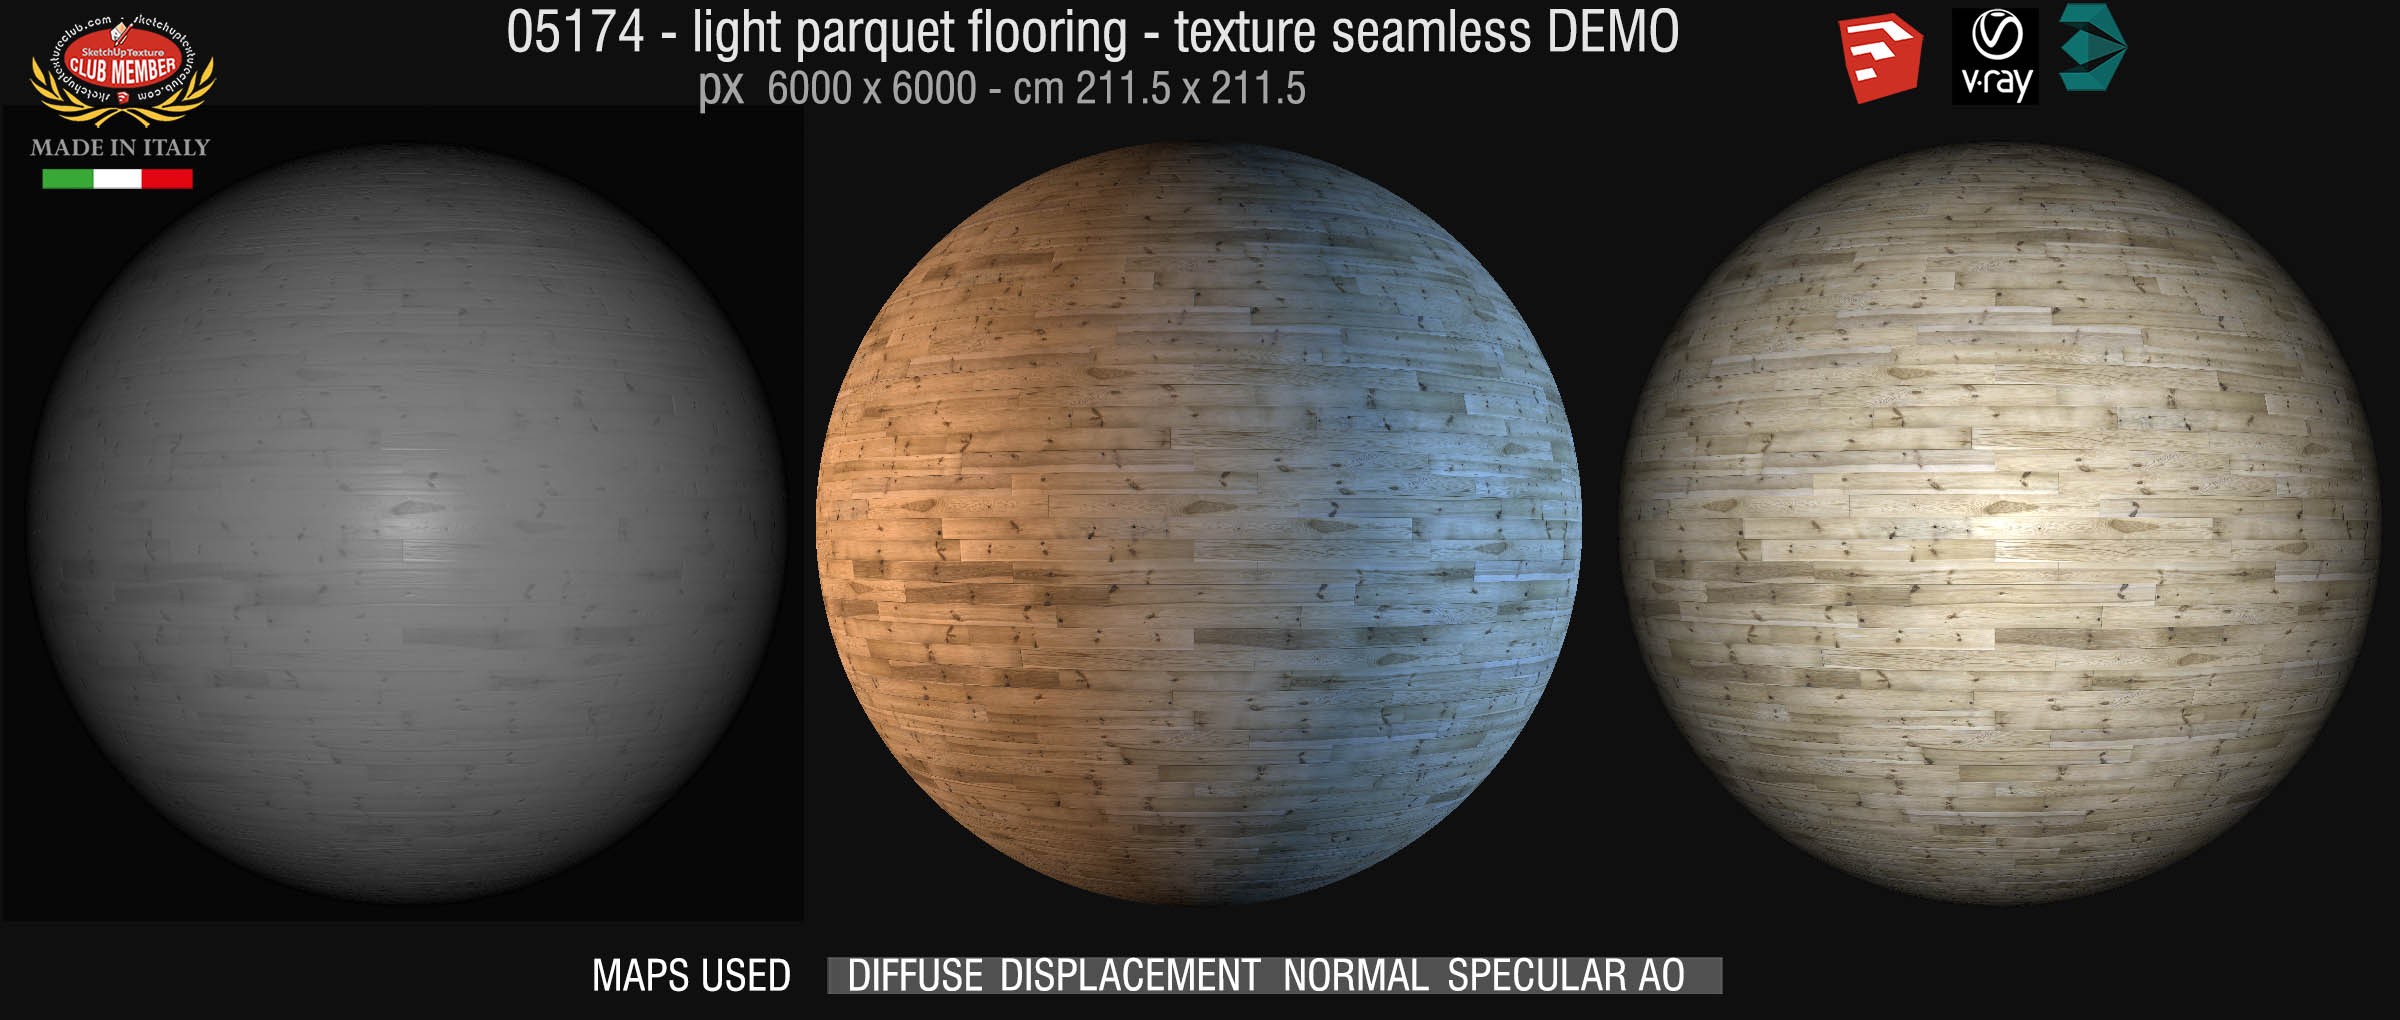 05174 HR Light parquet texture seamless + maps DEMO